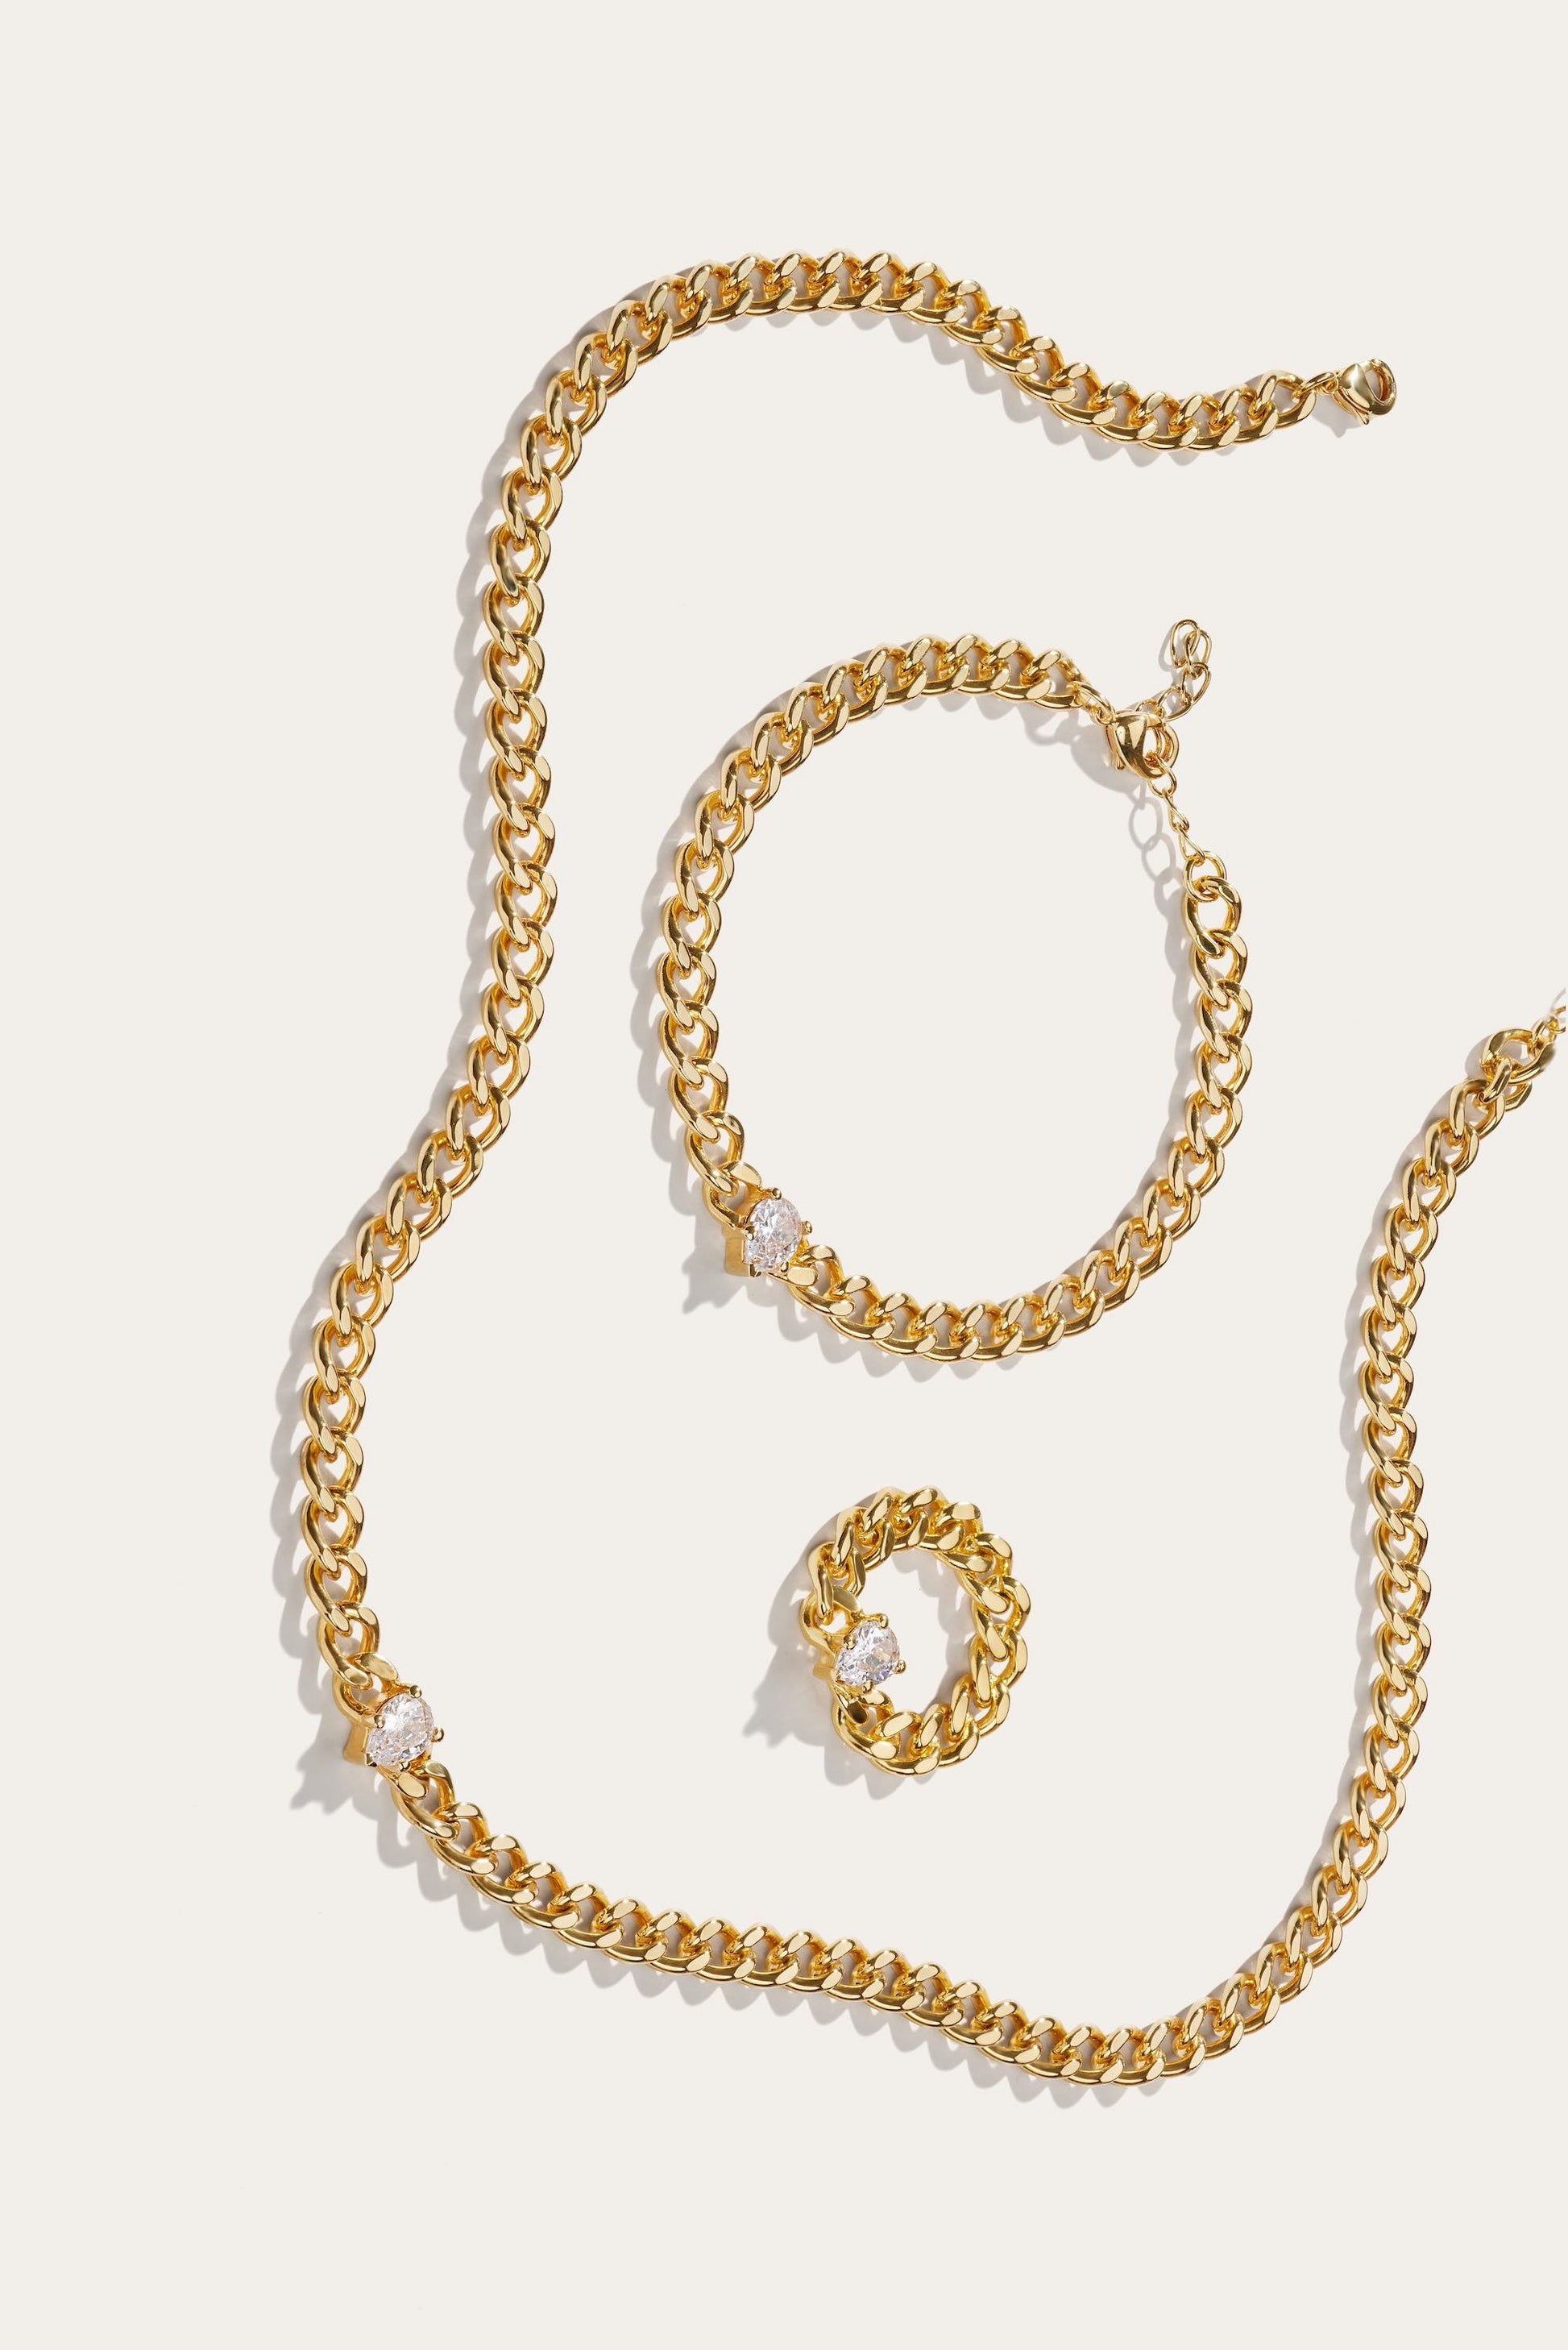 Catena Celeste gold plated necklace